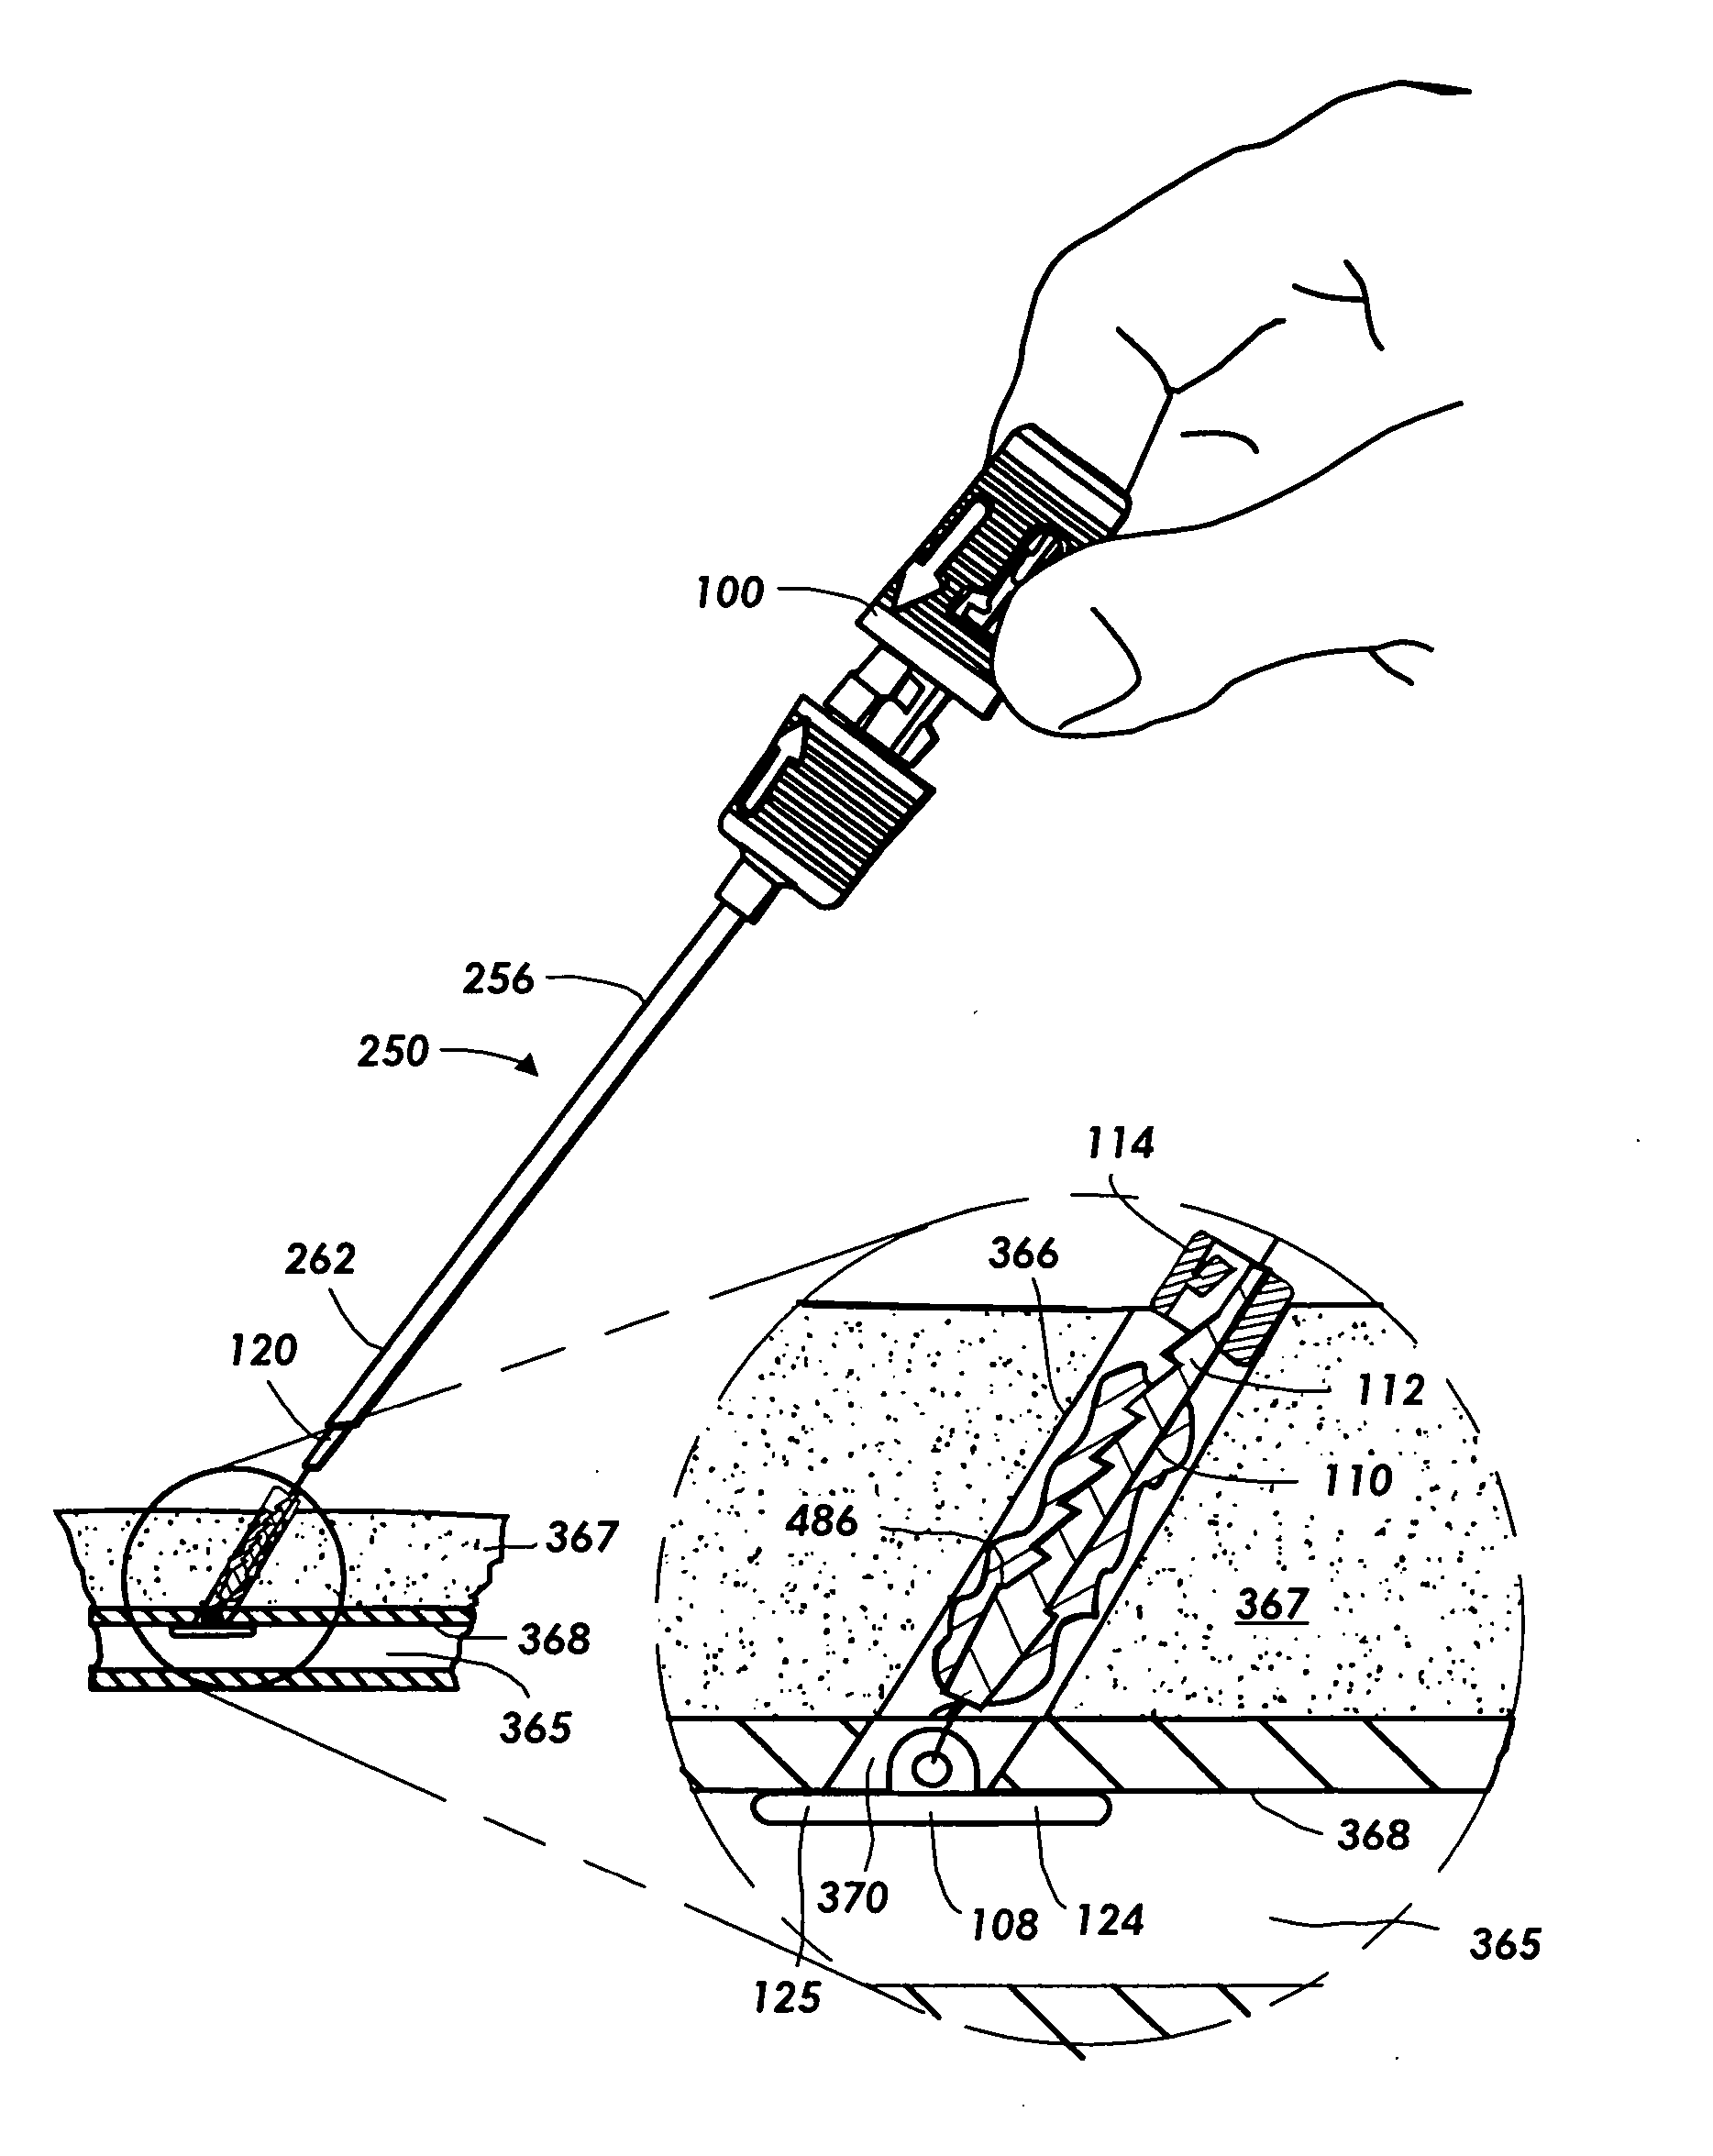 Vascular sealing device with locking hub